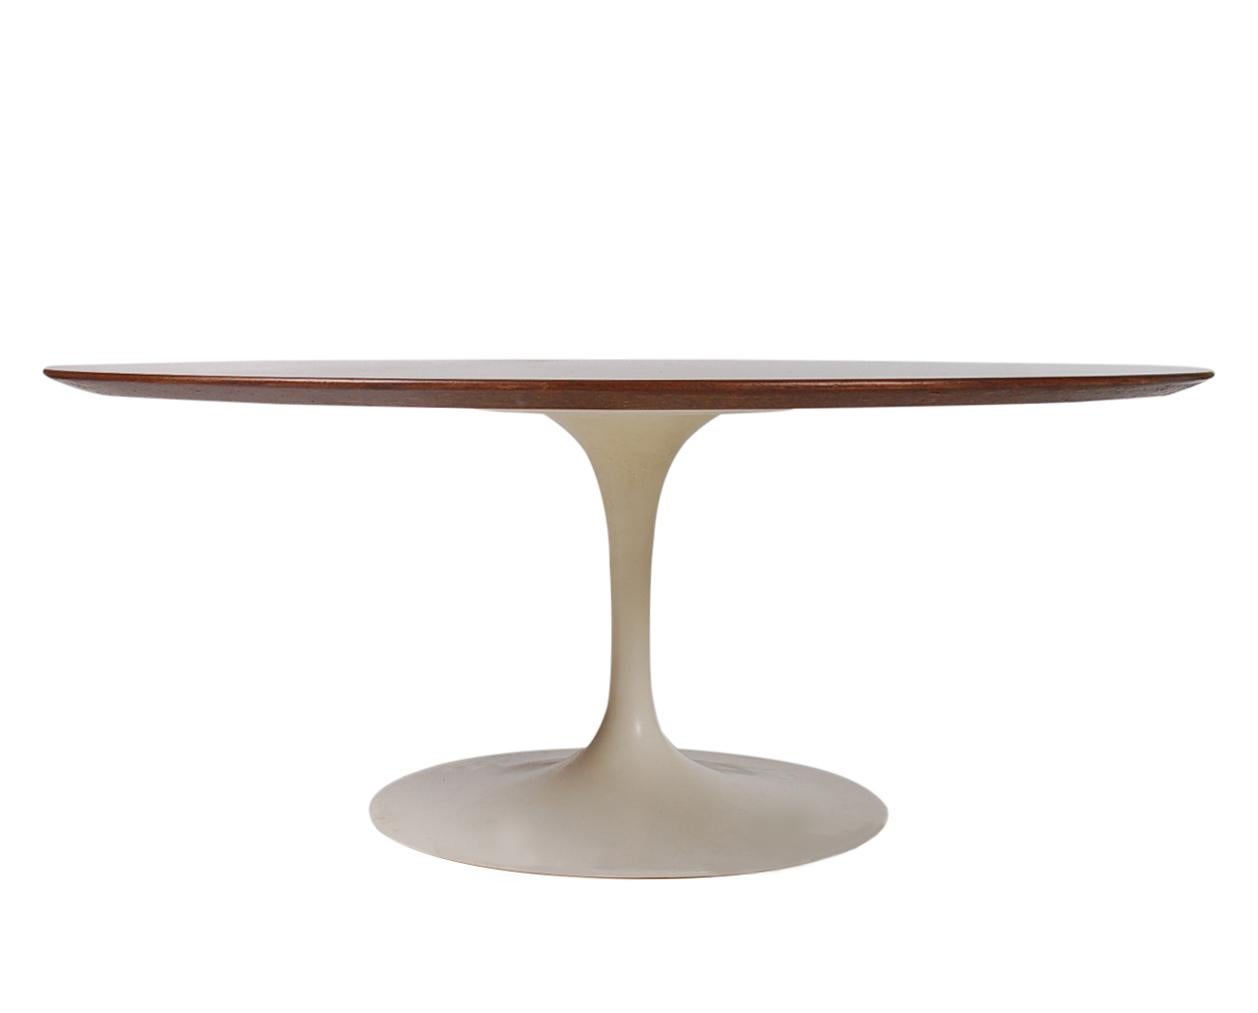 North American Mid-Century Modern Eero Saarinen for Knoll Tulip Coffee Table with Walnut Top For Sale